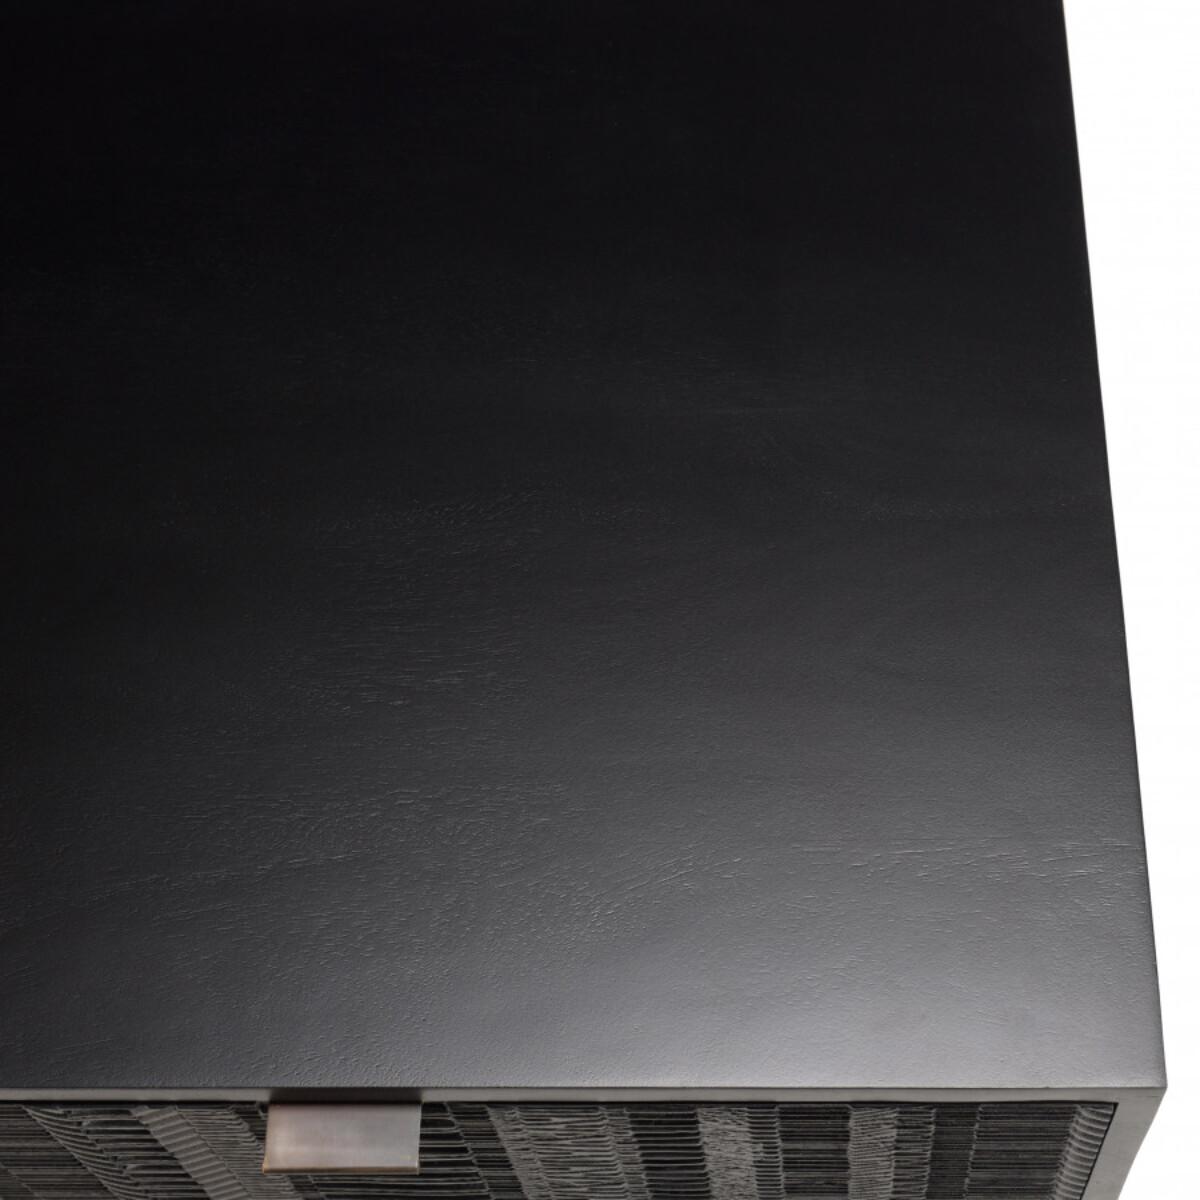 GLORIA - Table basse en manguier noir 2 tiroirs sculptés pieds métal